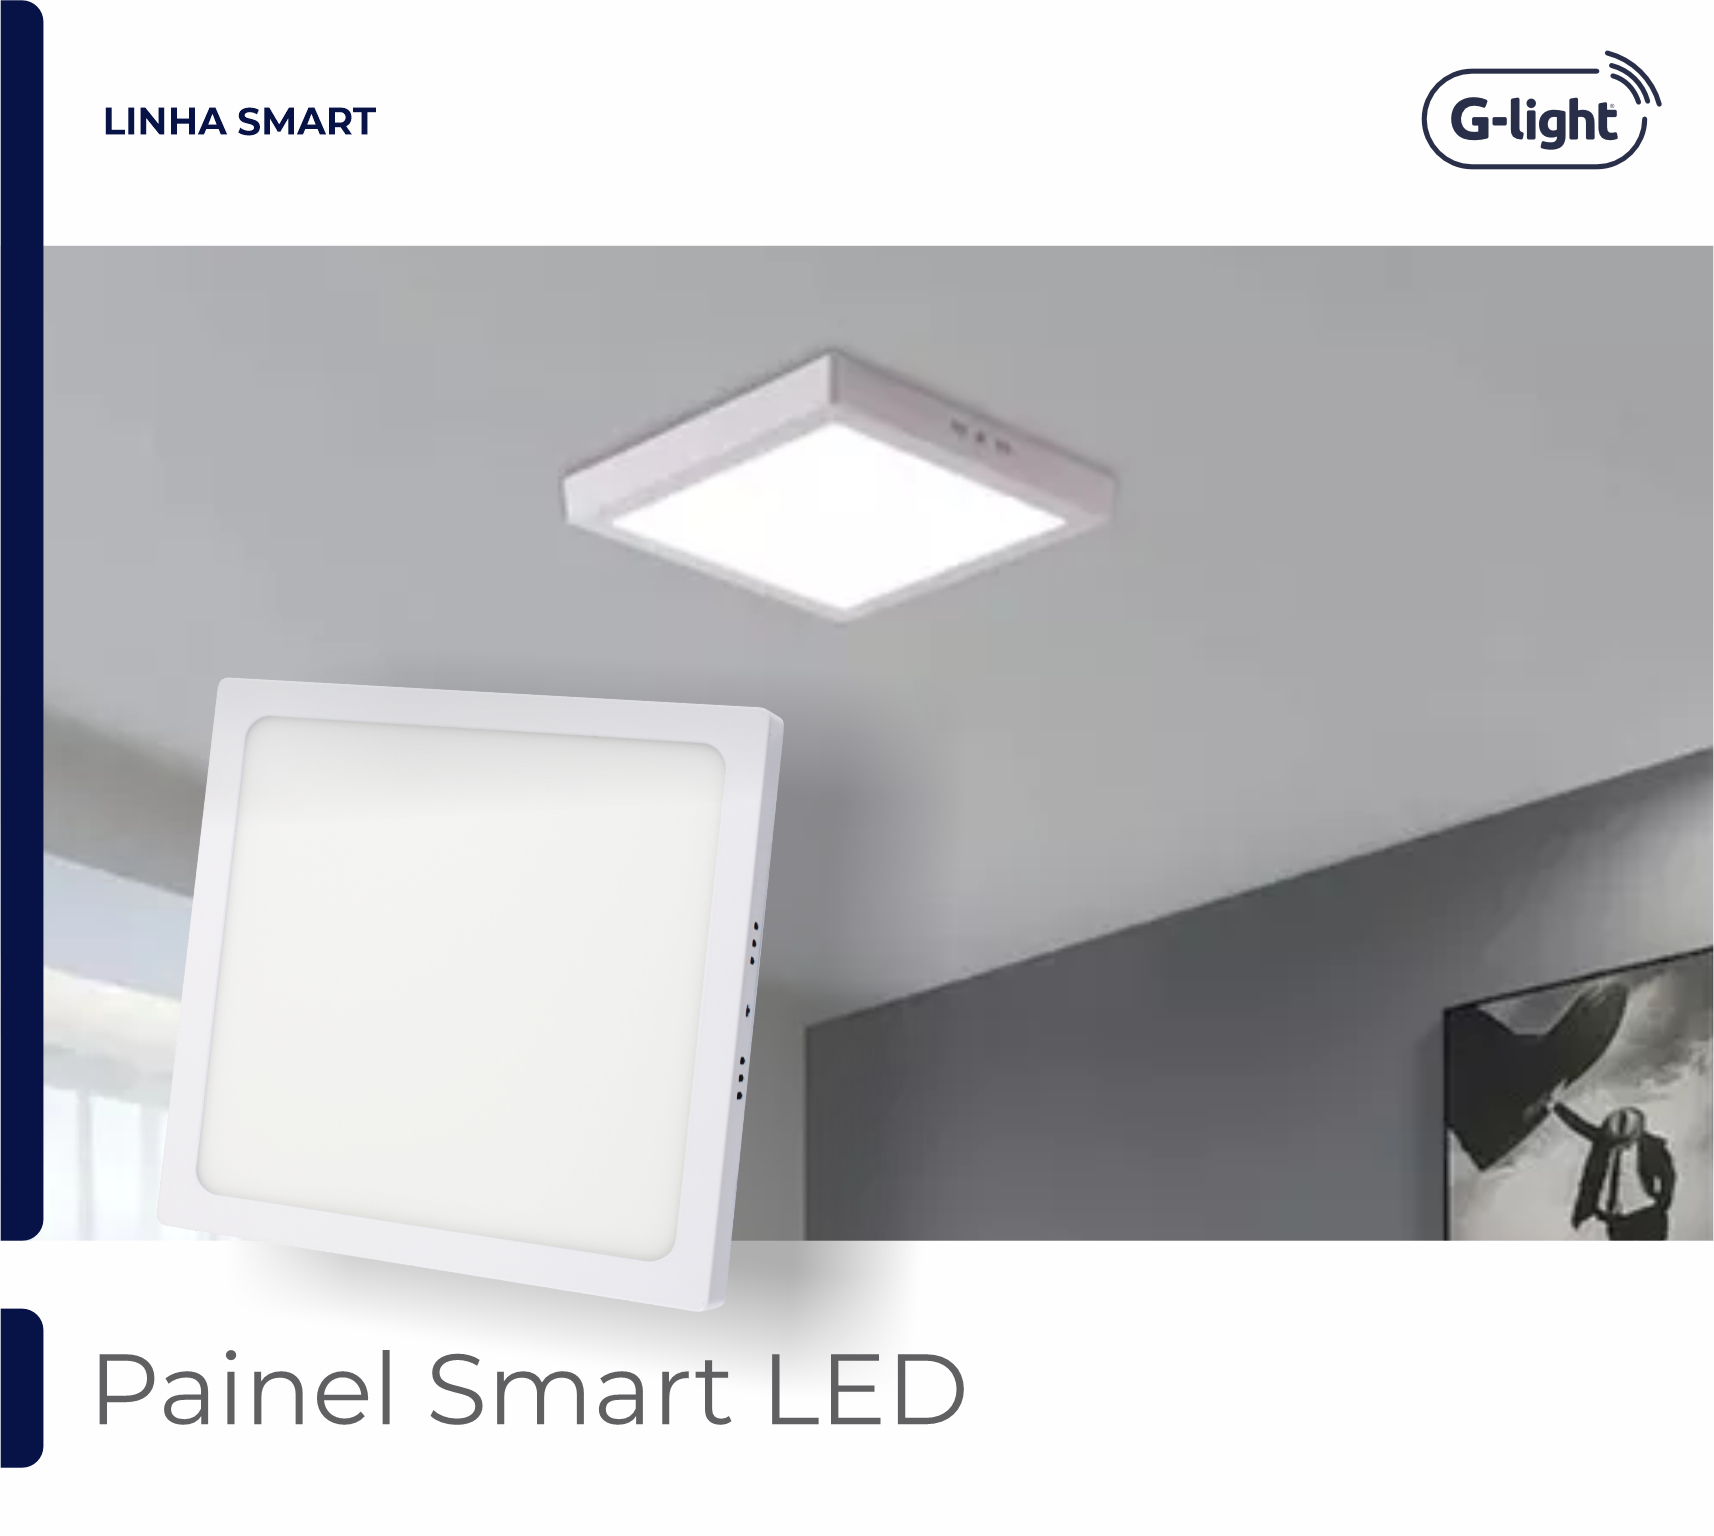 Painel Smart LED